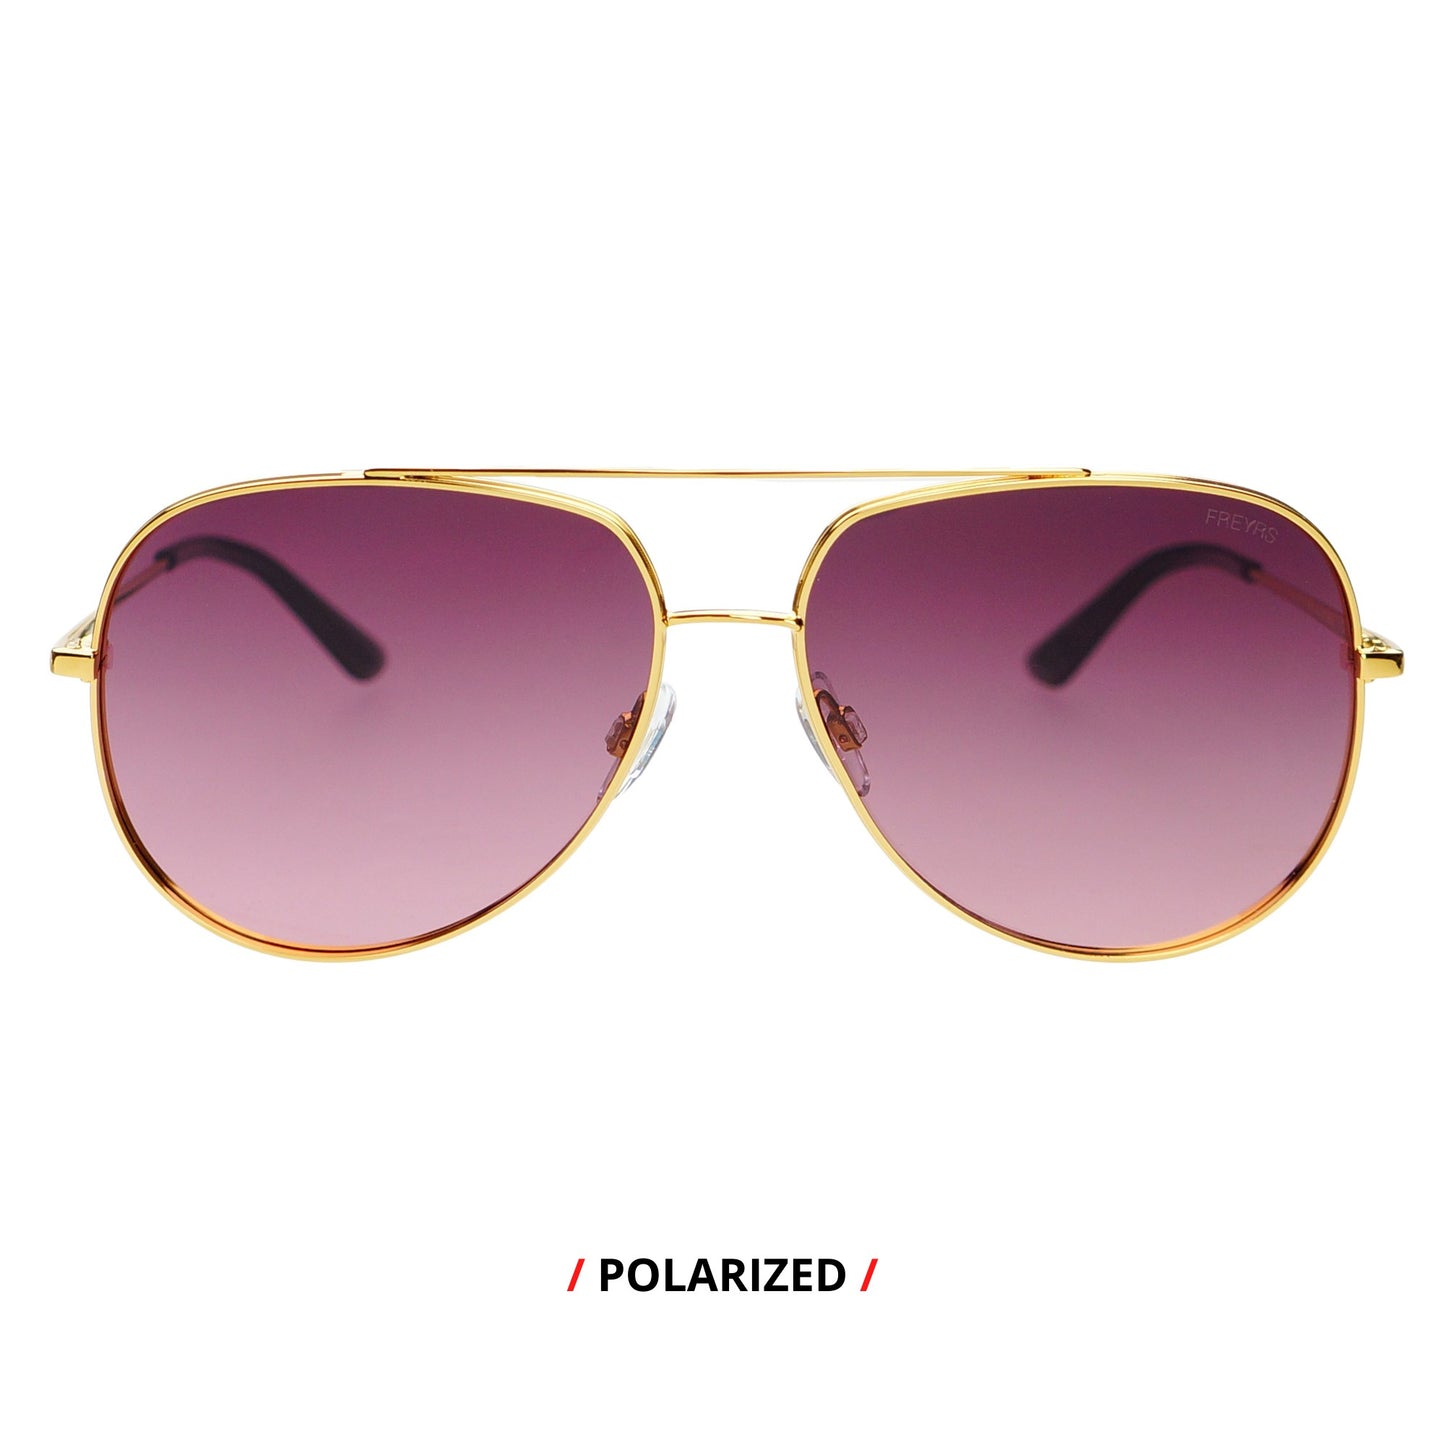 Max Polarized Unisex Aviator Sunglasses by FREYRS - Purple/Gold